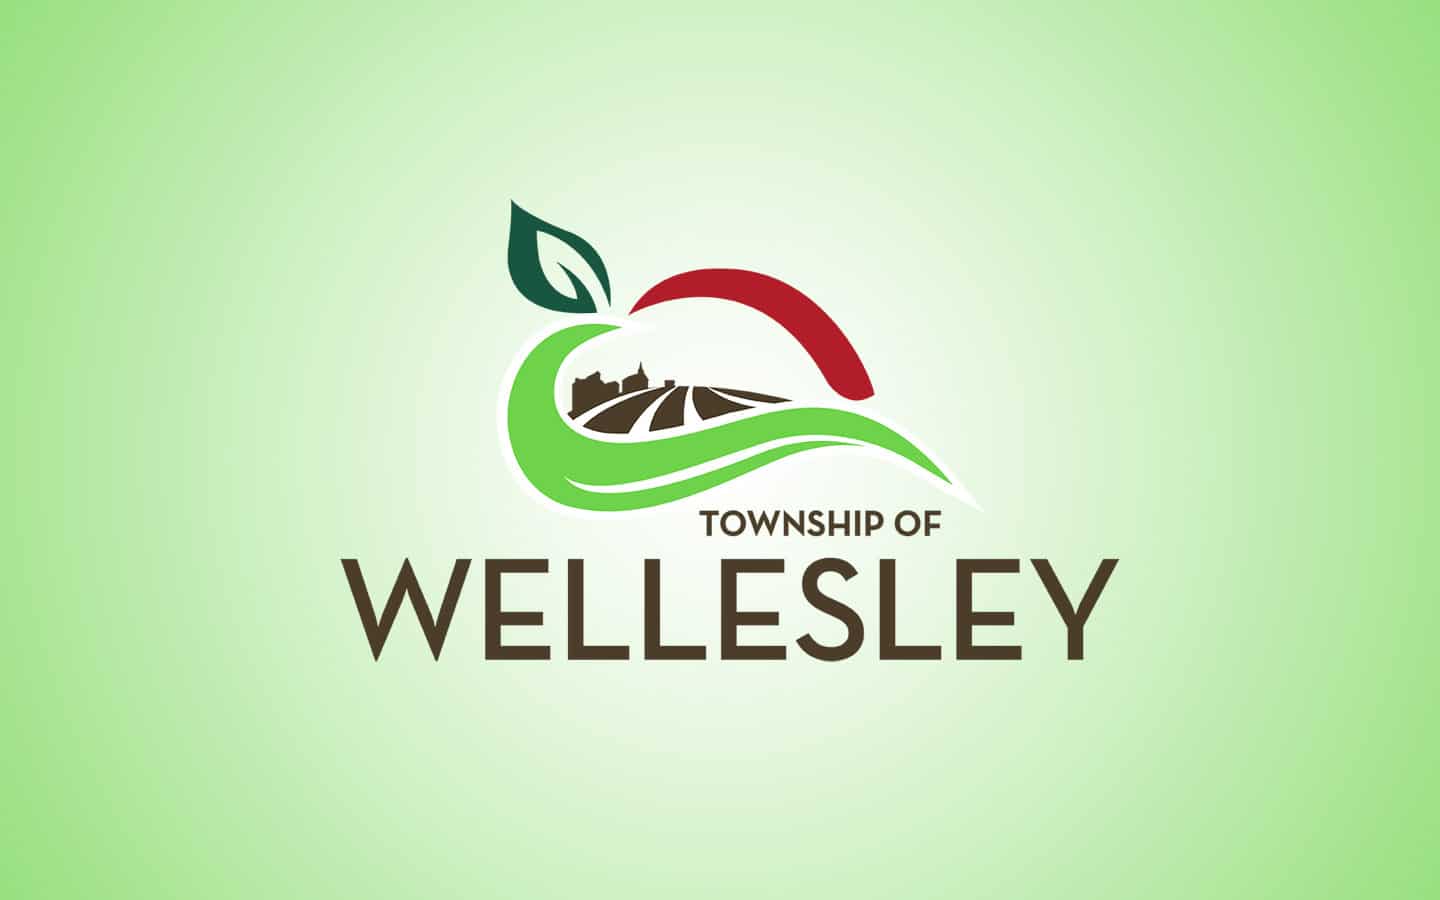 Province’s development focus means plenty of changes in Wellesley